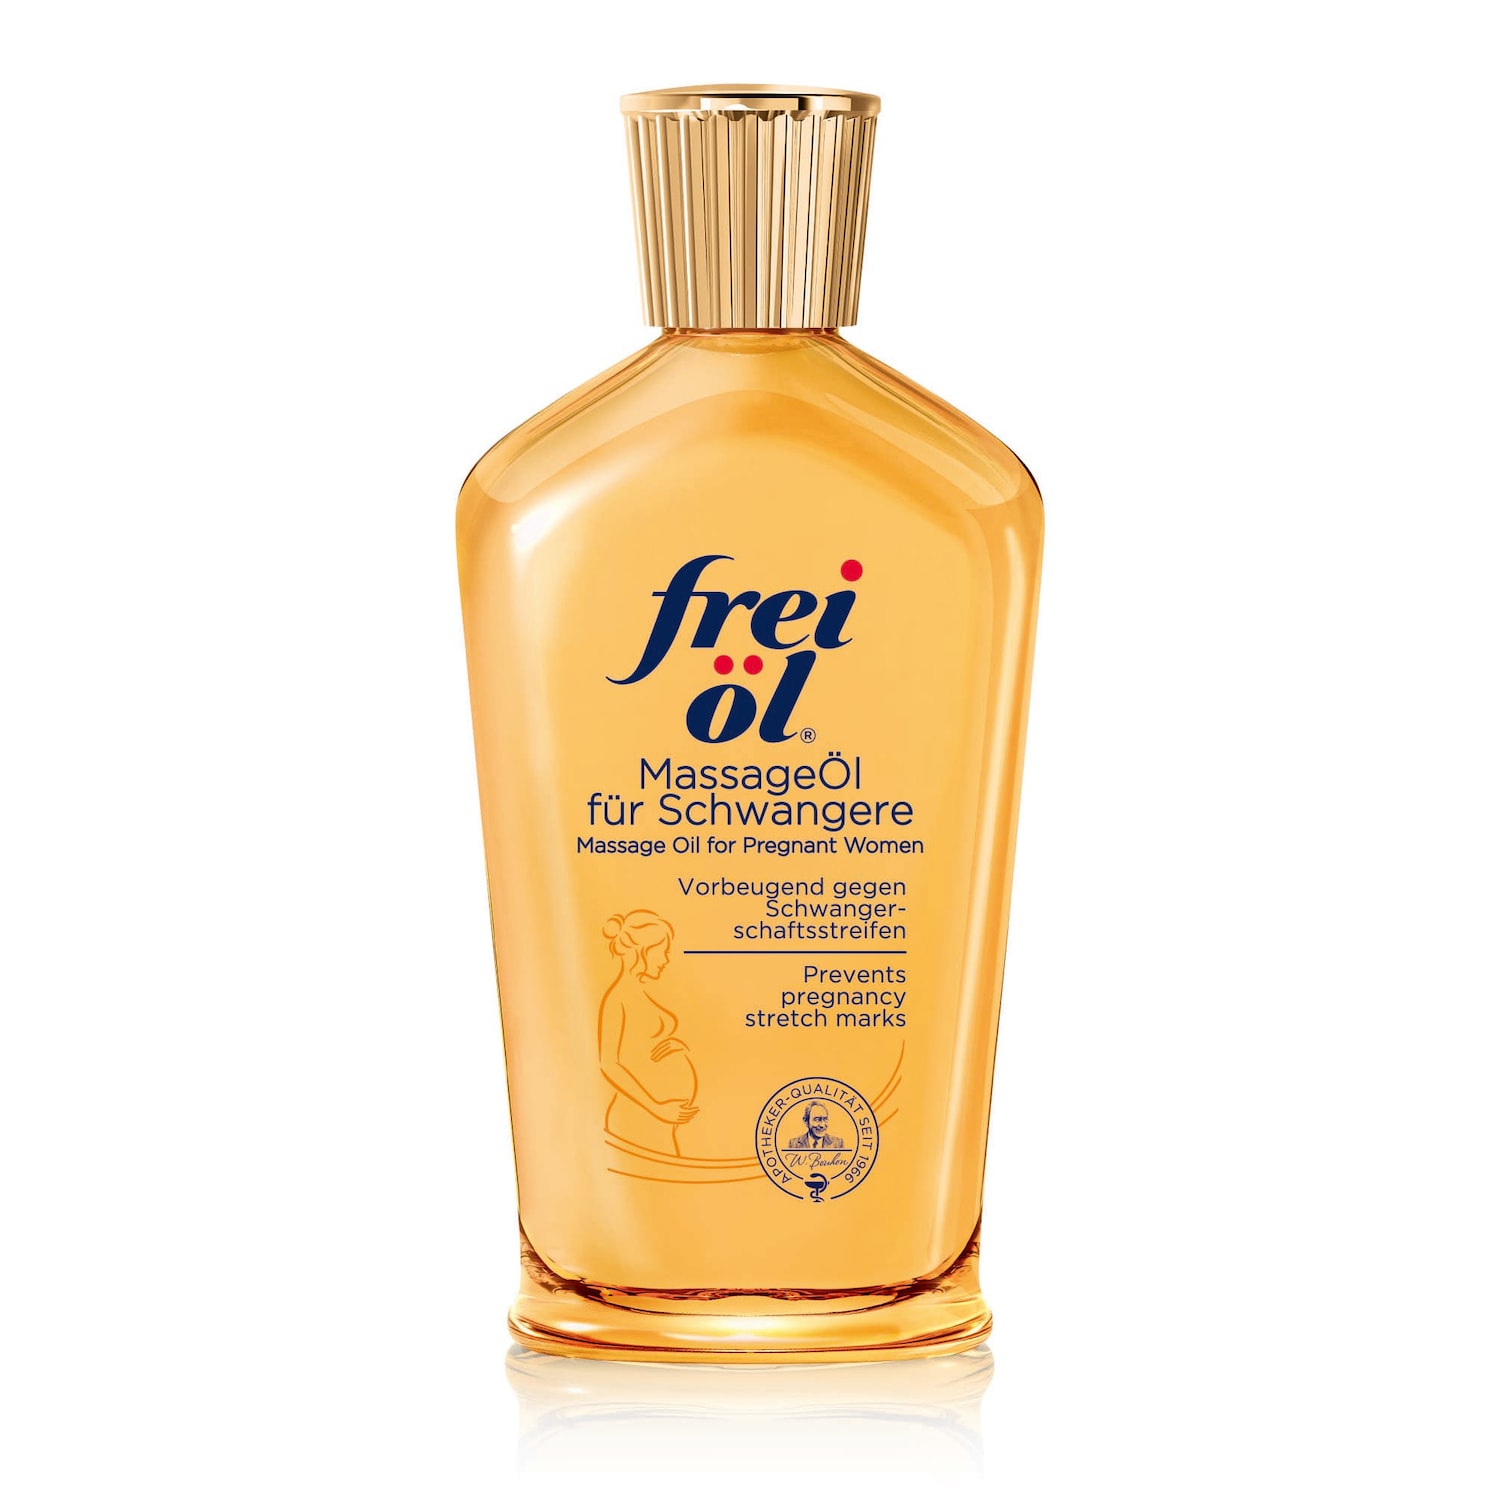 Frei Öl® FREE OIL MASSAGE OIL for pregnant women